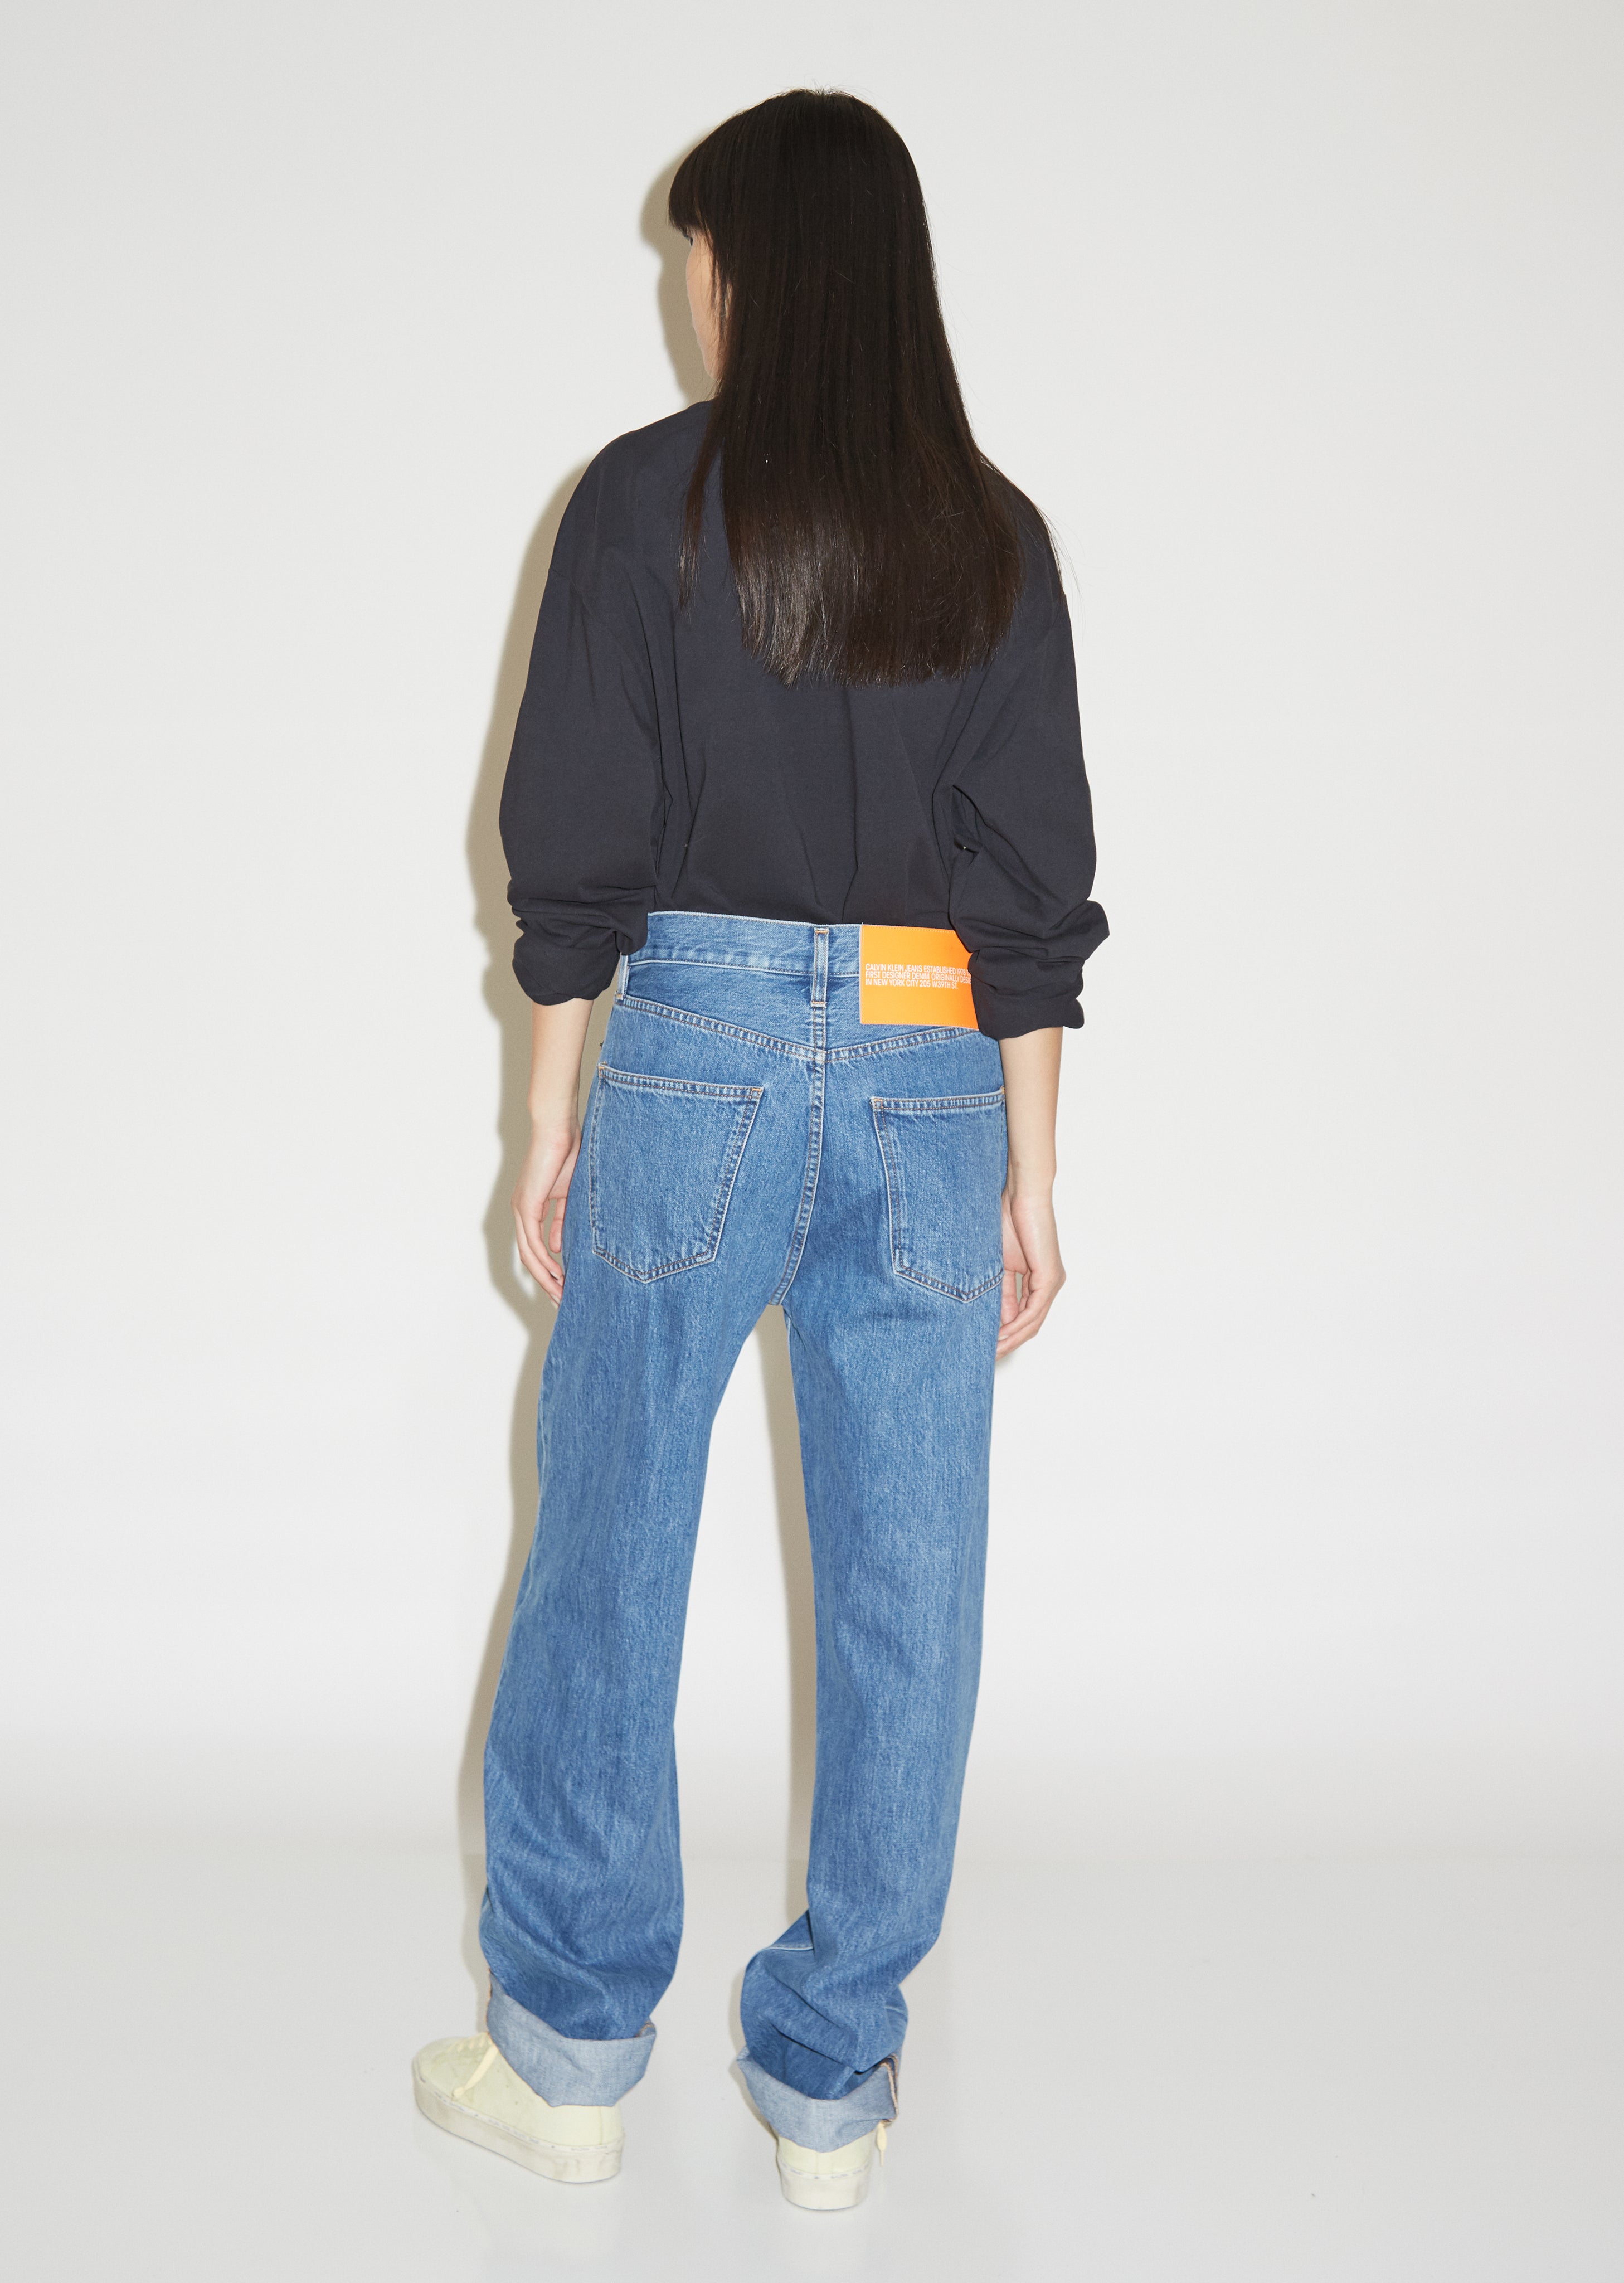 1978 Calvin Klein Women's Jeans Ad-DI0648